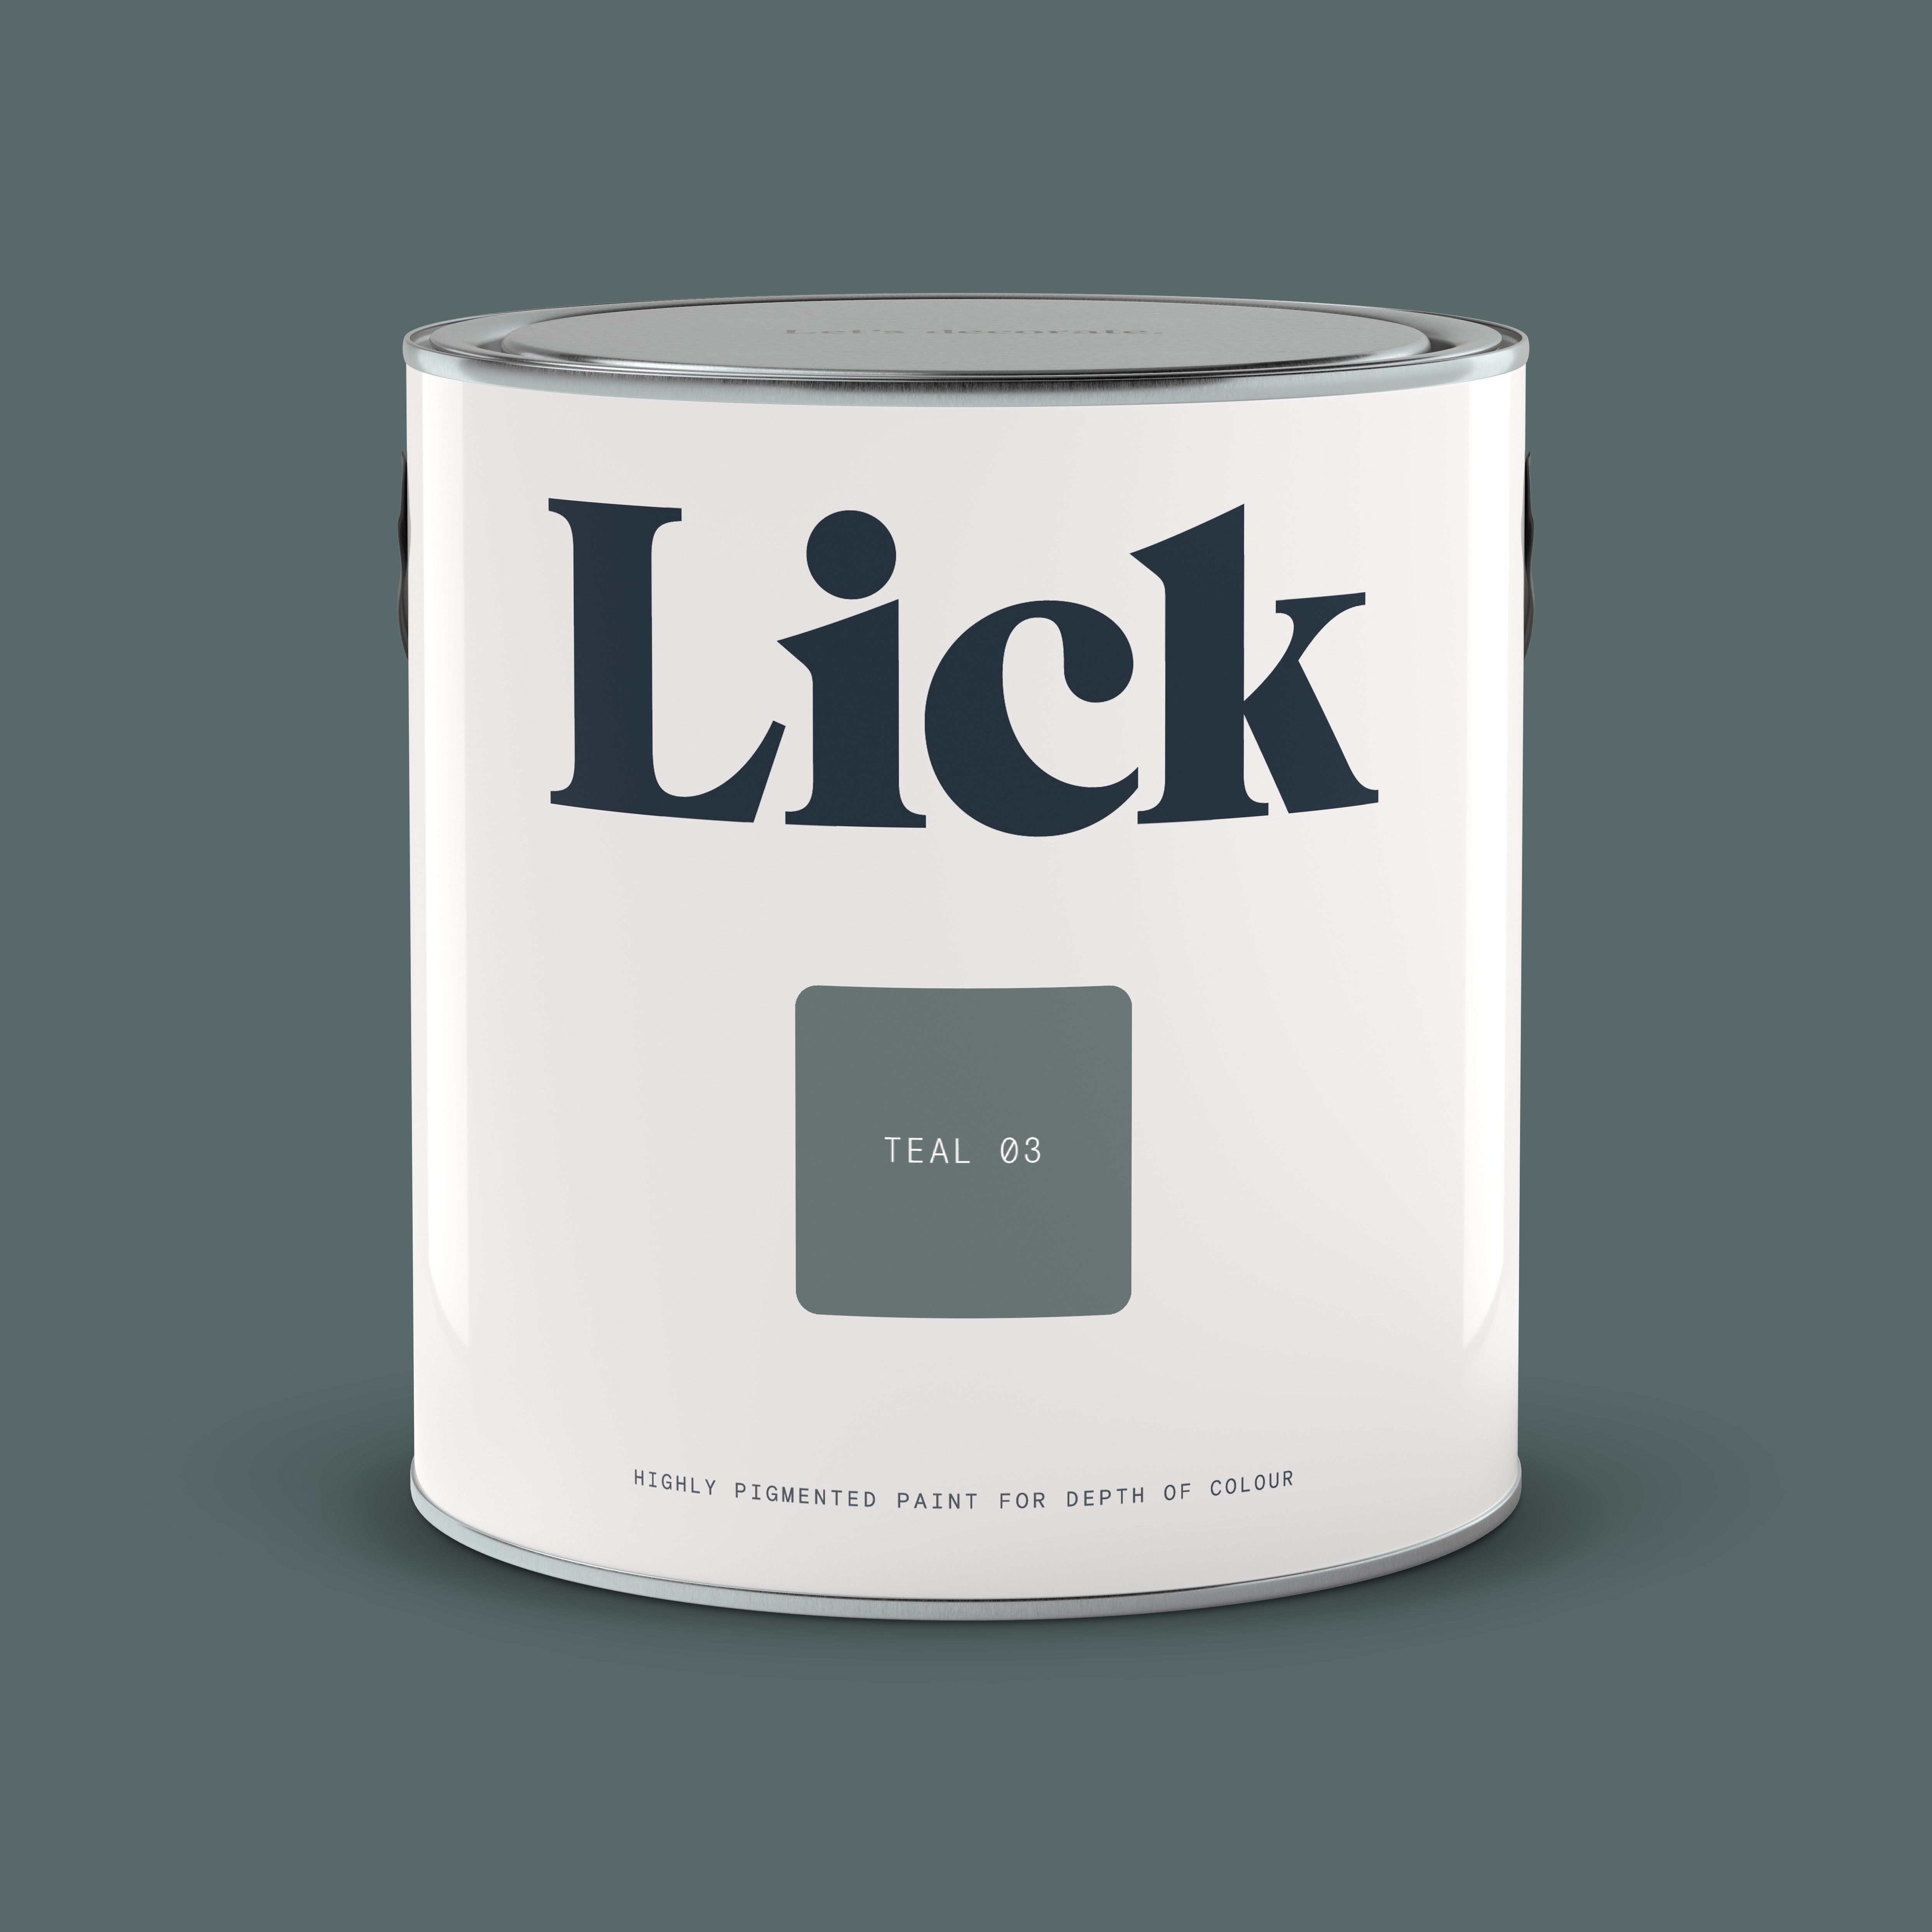 Lick Teal 03 Matt Emulsion paint, 2.5L